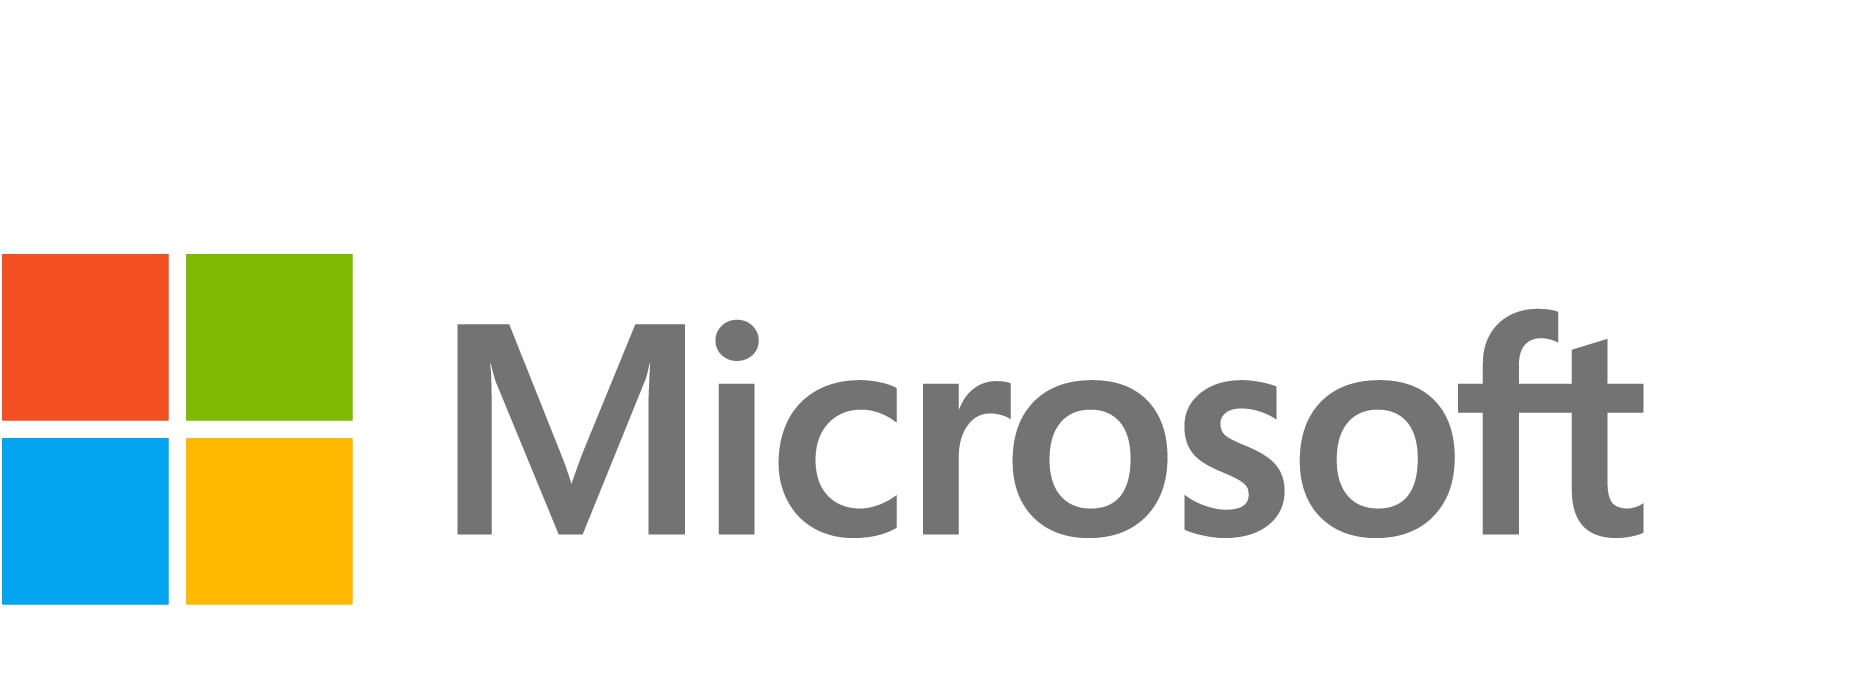 Microsoft Dynamics 365 Plan 1, Enterprise edition - subscription license (1